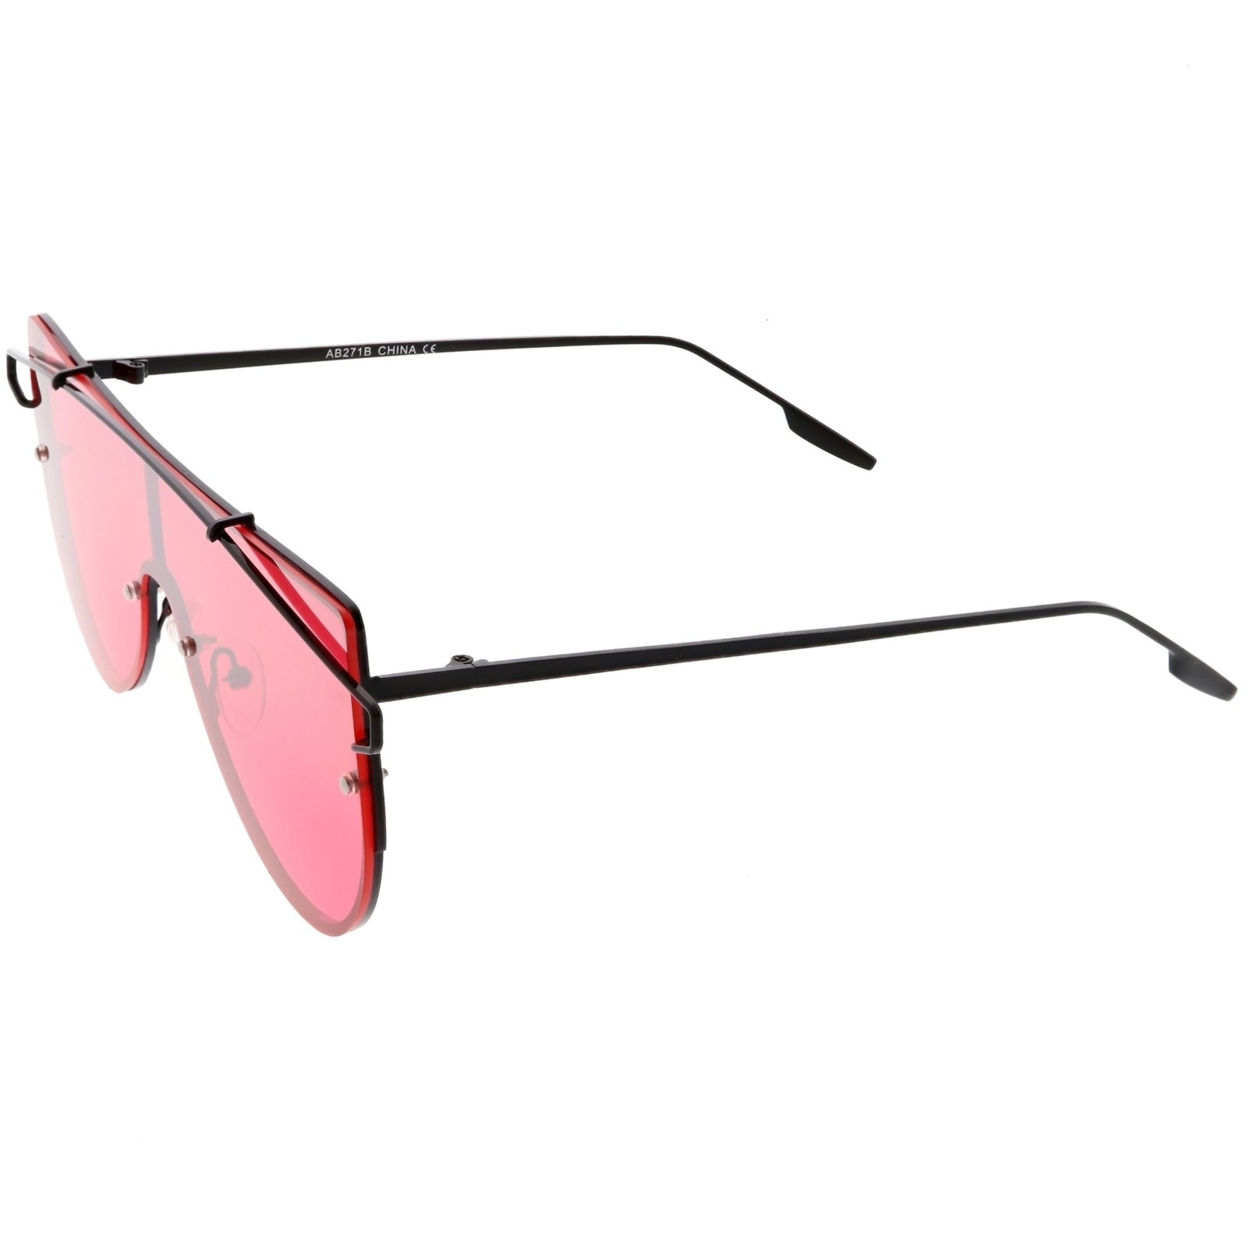 Futuristic Rimless Shield Sunglasses Metal Crossbar Colored Mono Lens 64mm - Black / Red